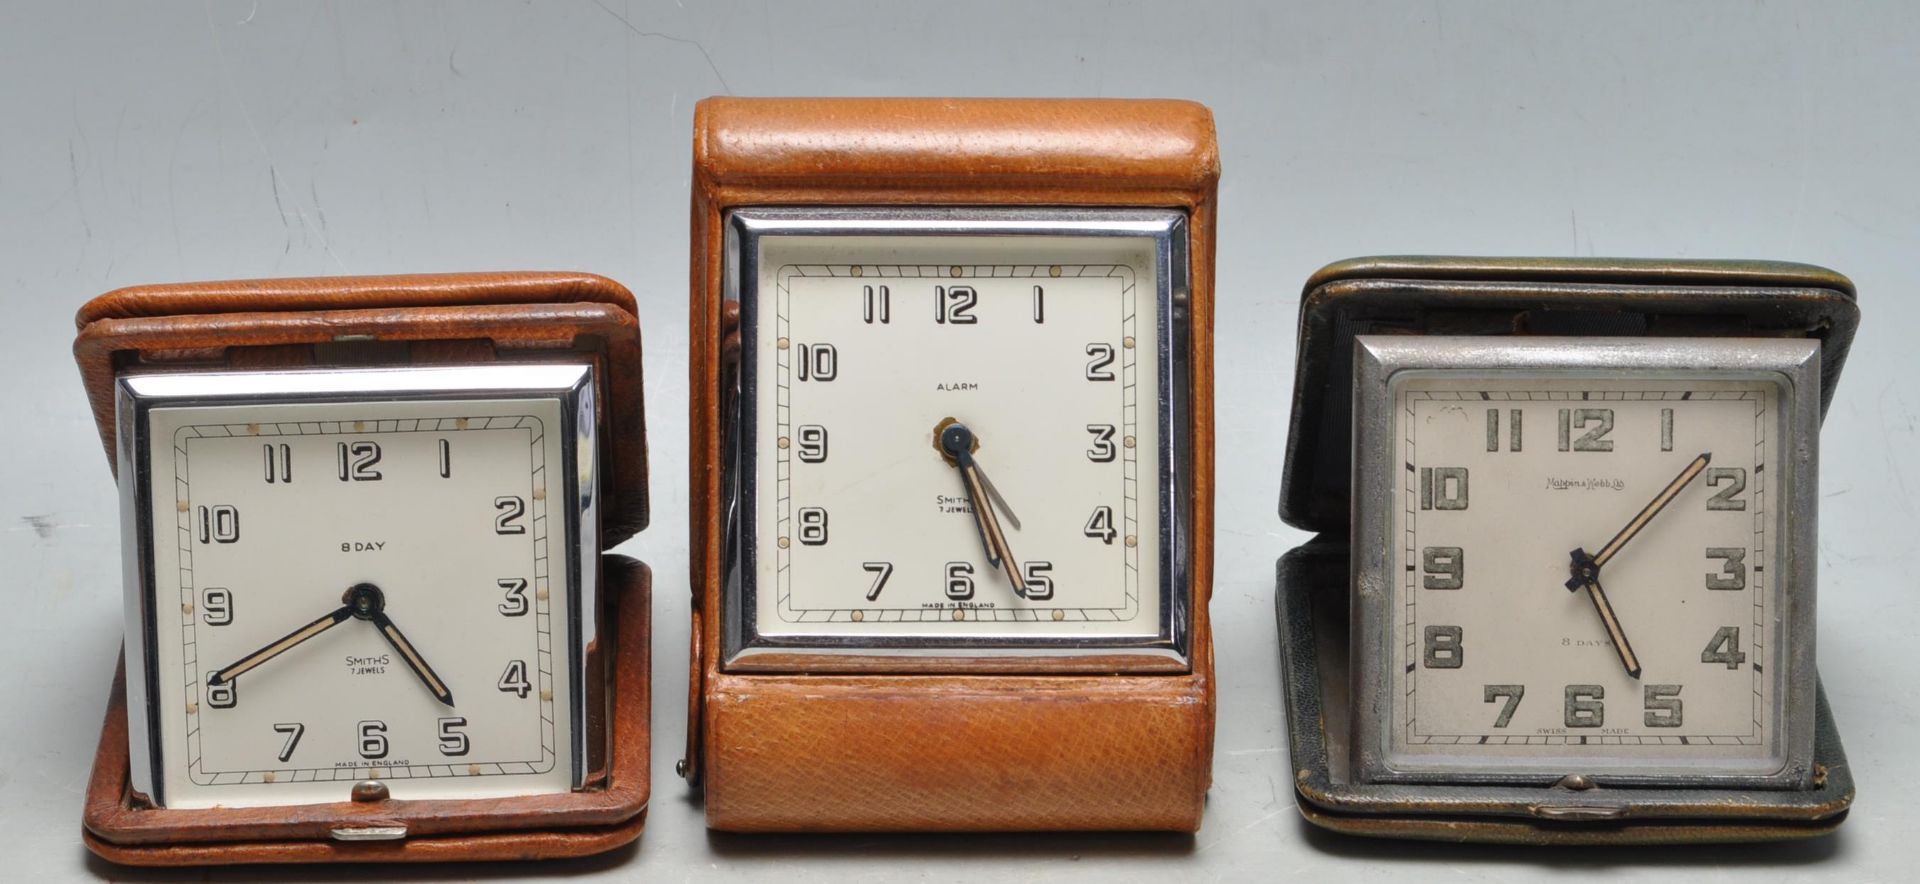 SET OF THREE VINTAGE 1950S MID 20TH CENTURY LEATHER BOUND TRAVEL CLOCK